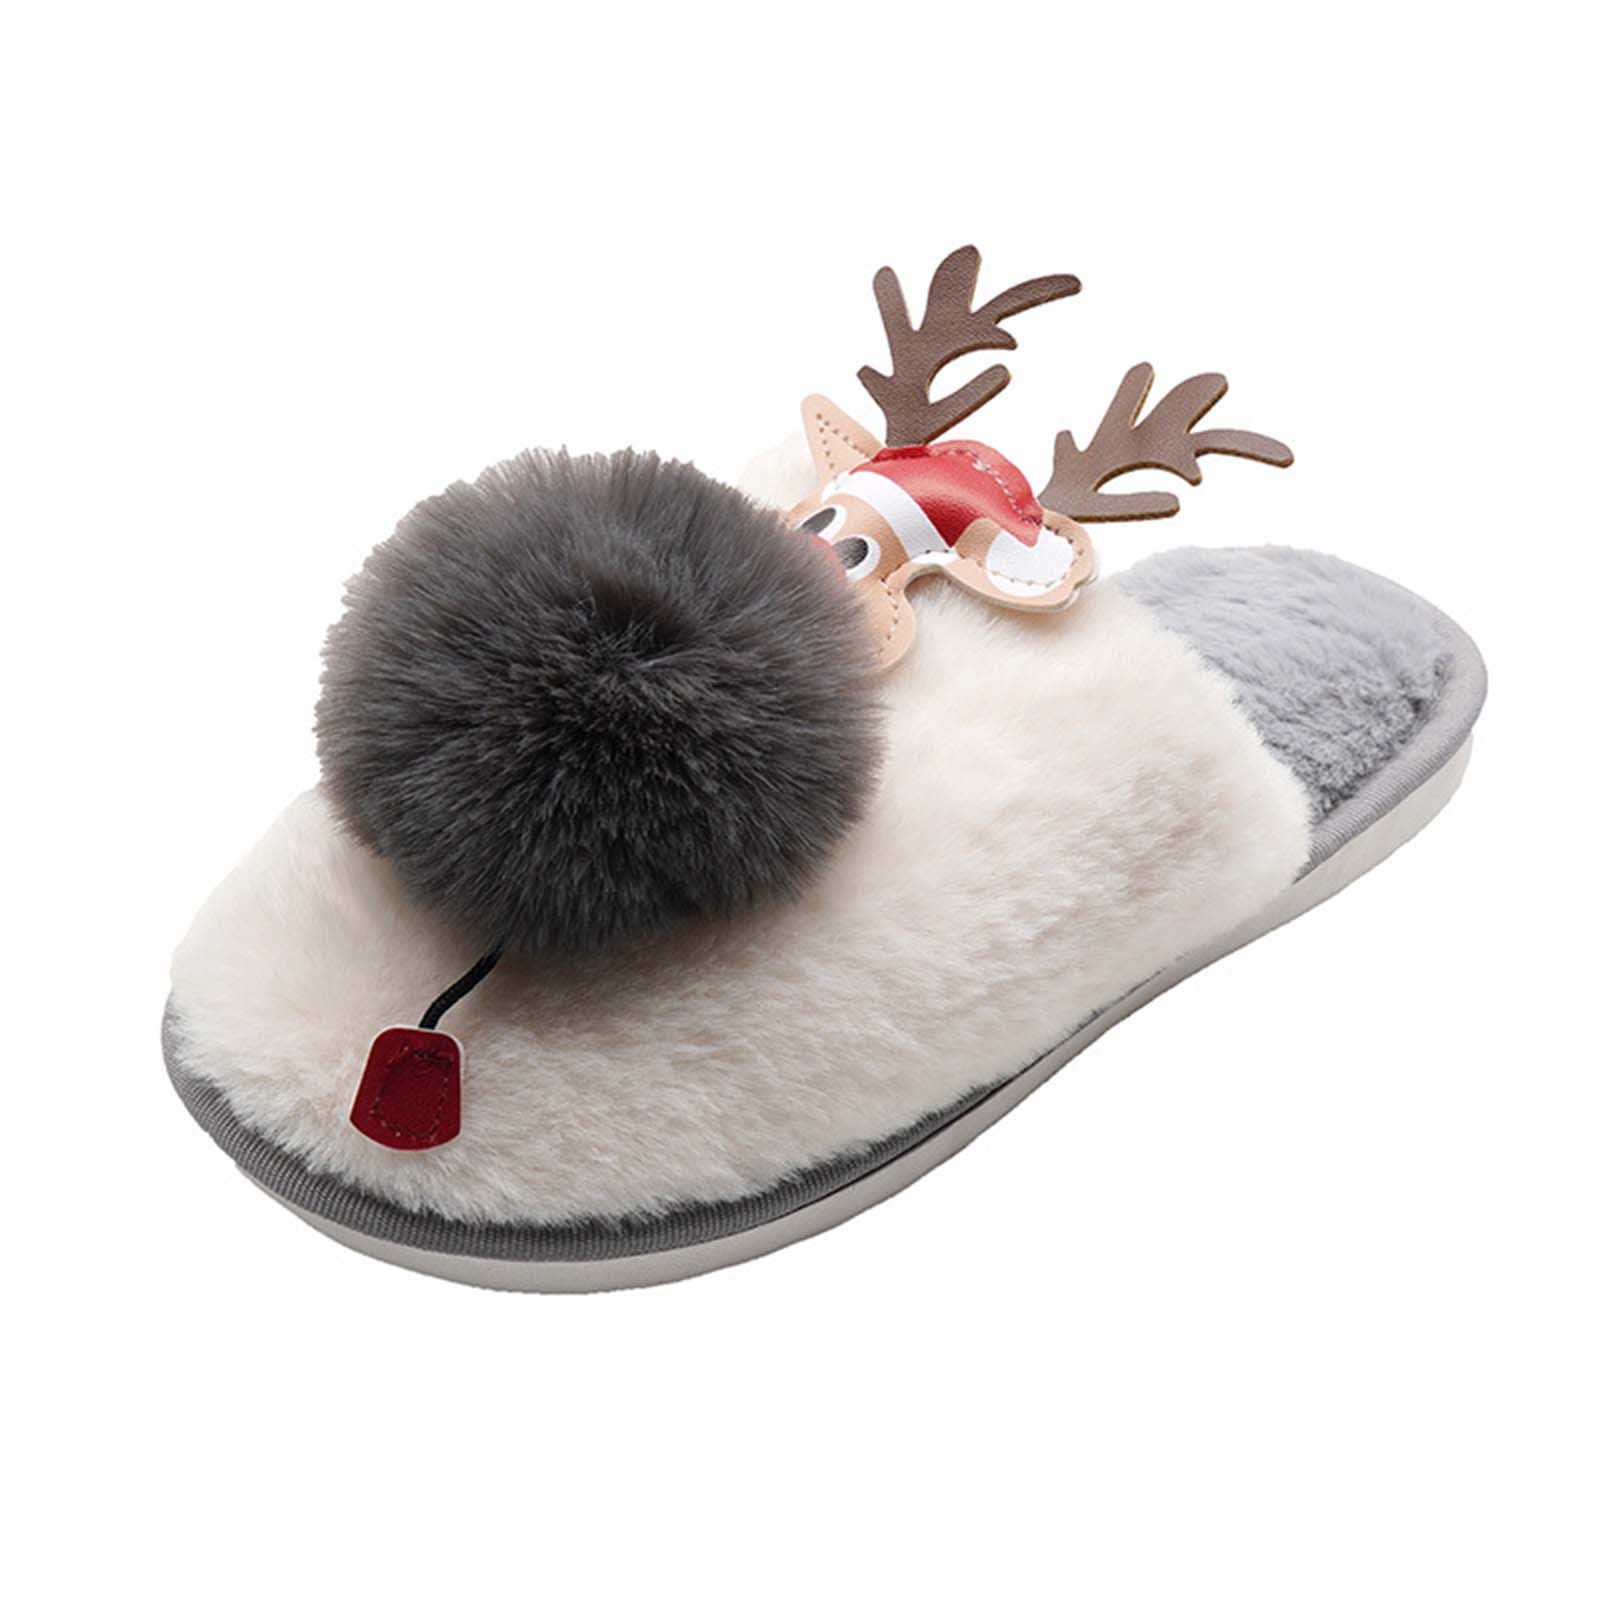 Tarmeek Christmas House Slippers Women Indoor Outdoor Christmas Hair ball Cotton Baotou Hairy Home Floor Cute Warm Shoes Christmas Gifts 0cfe8ebb 3075 4b88 8065 0fbbf9d51480.a34918980e554d36e8d033f788cc3938